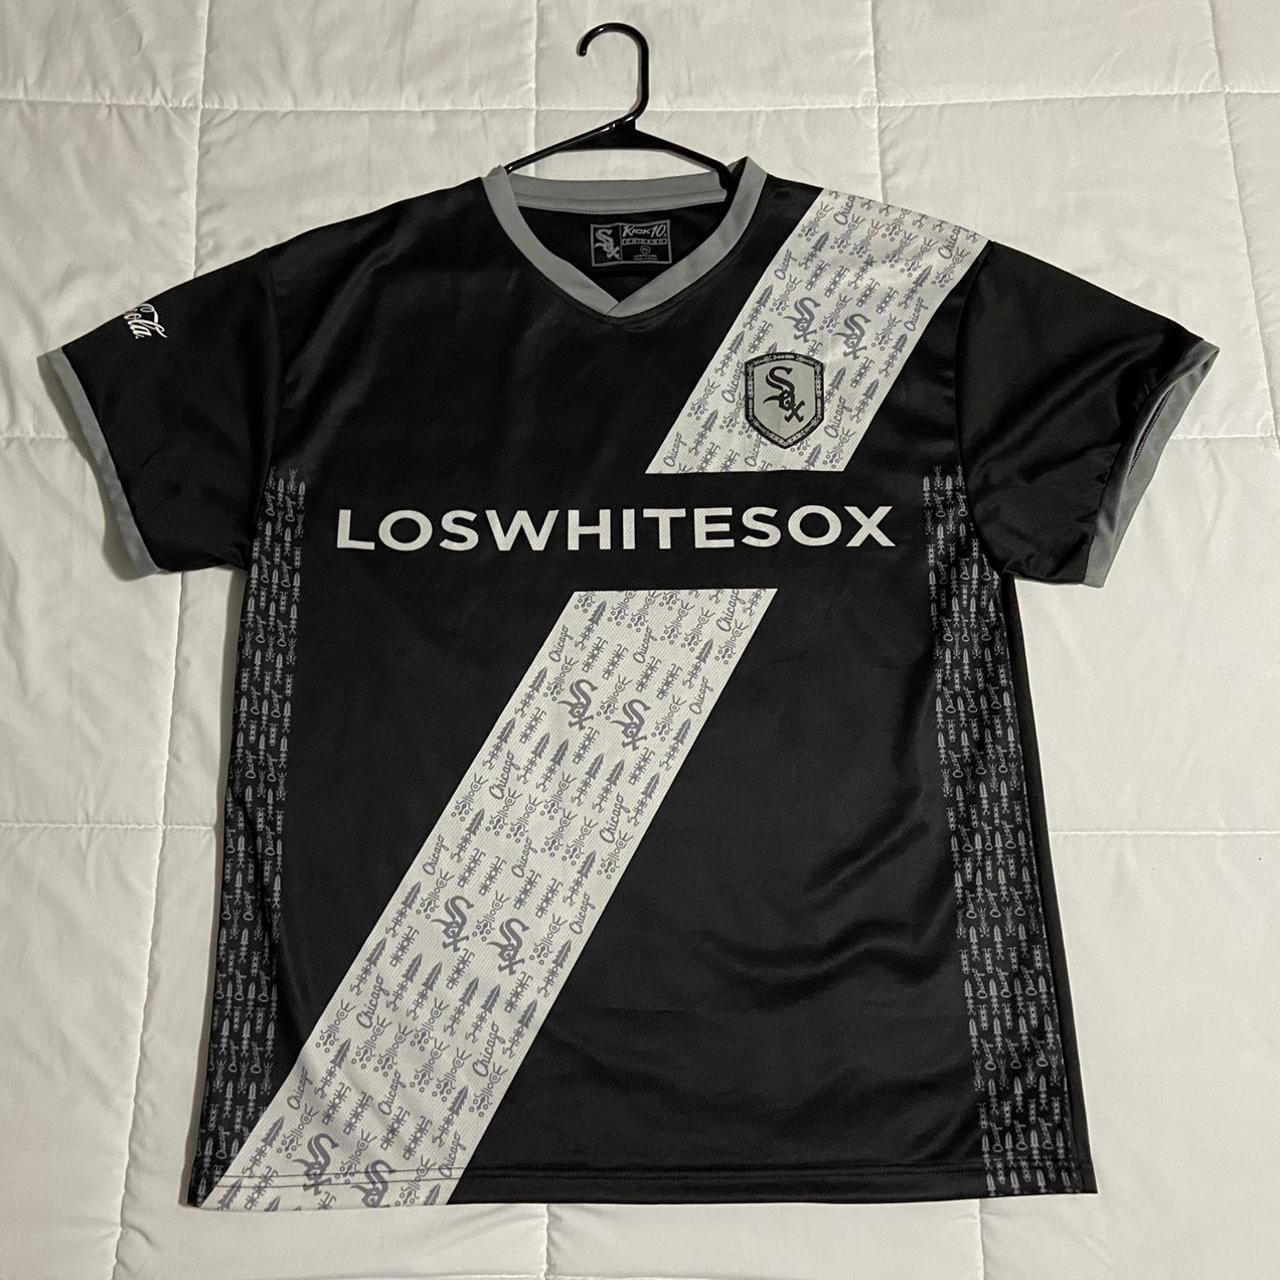 white sox soccer jersey